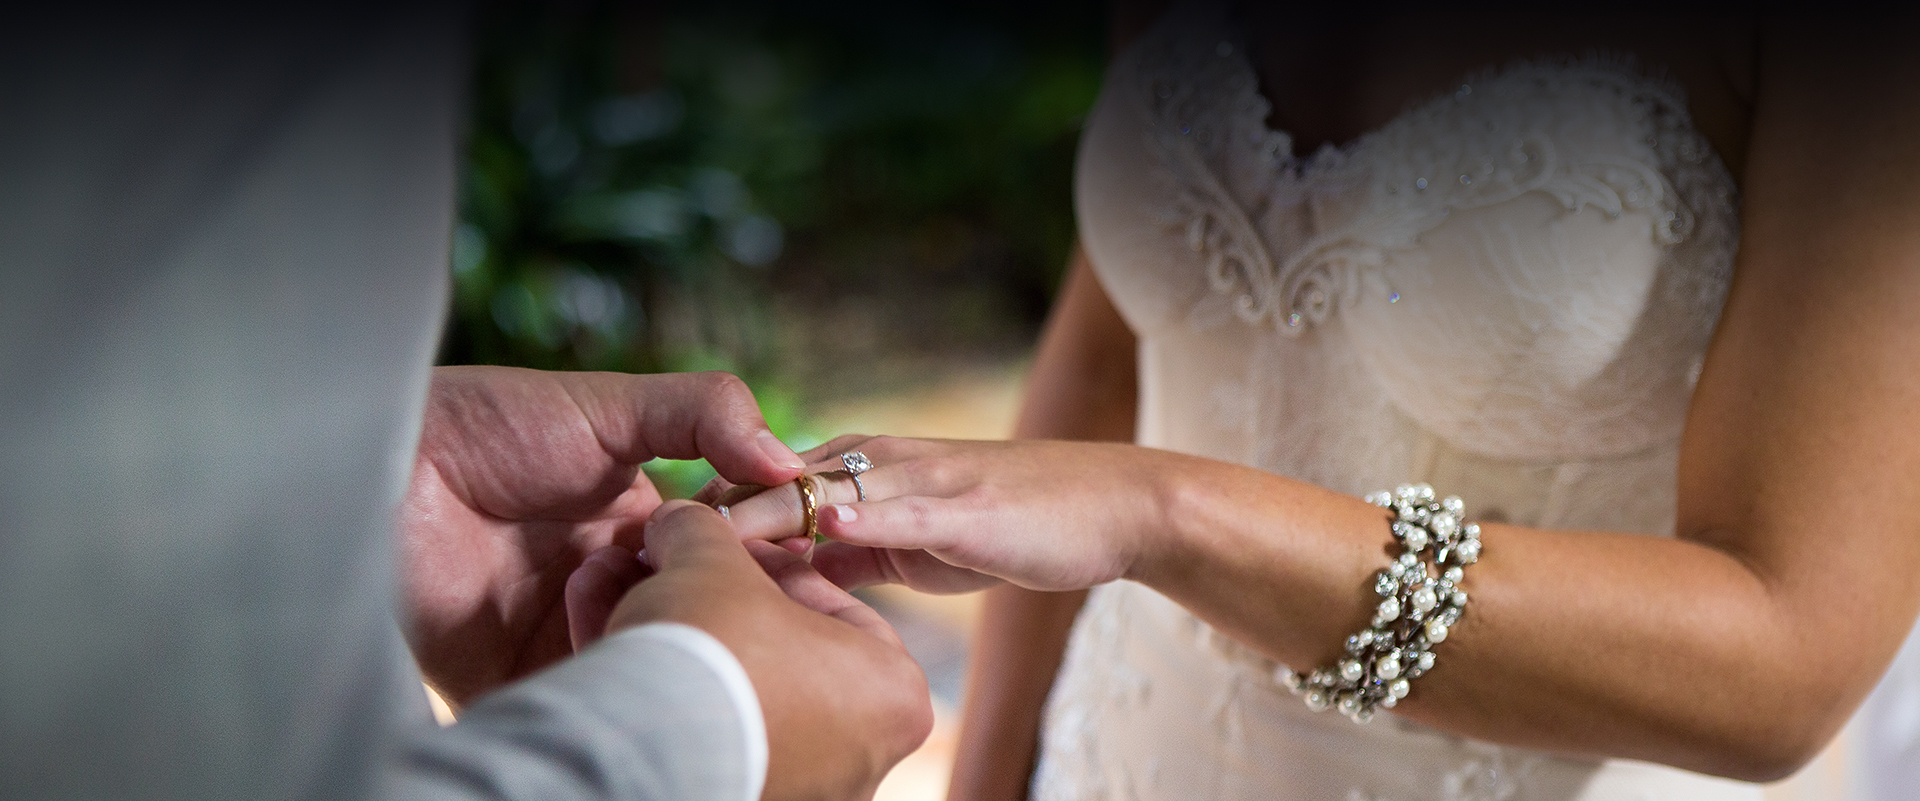 Planning Your Wedding - SNA Weddings PlanningYourWed Gradient